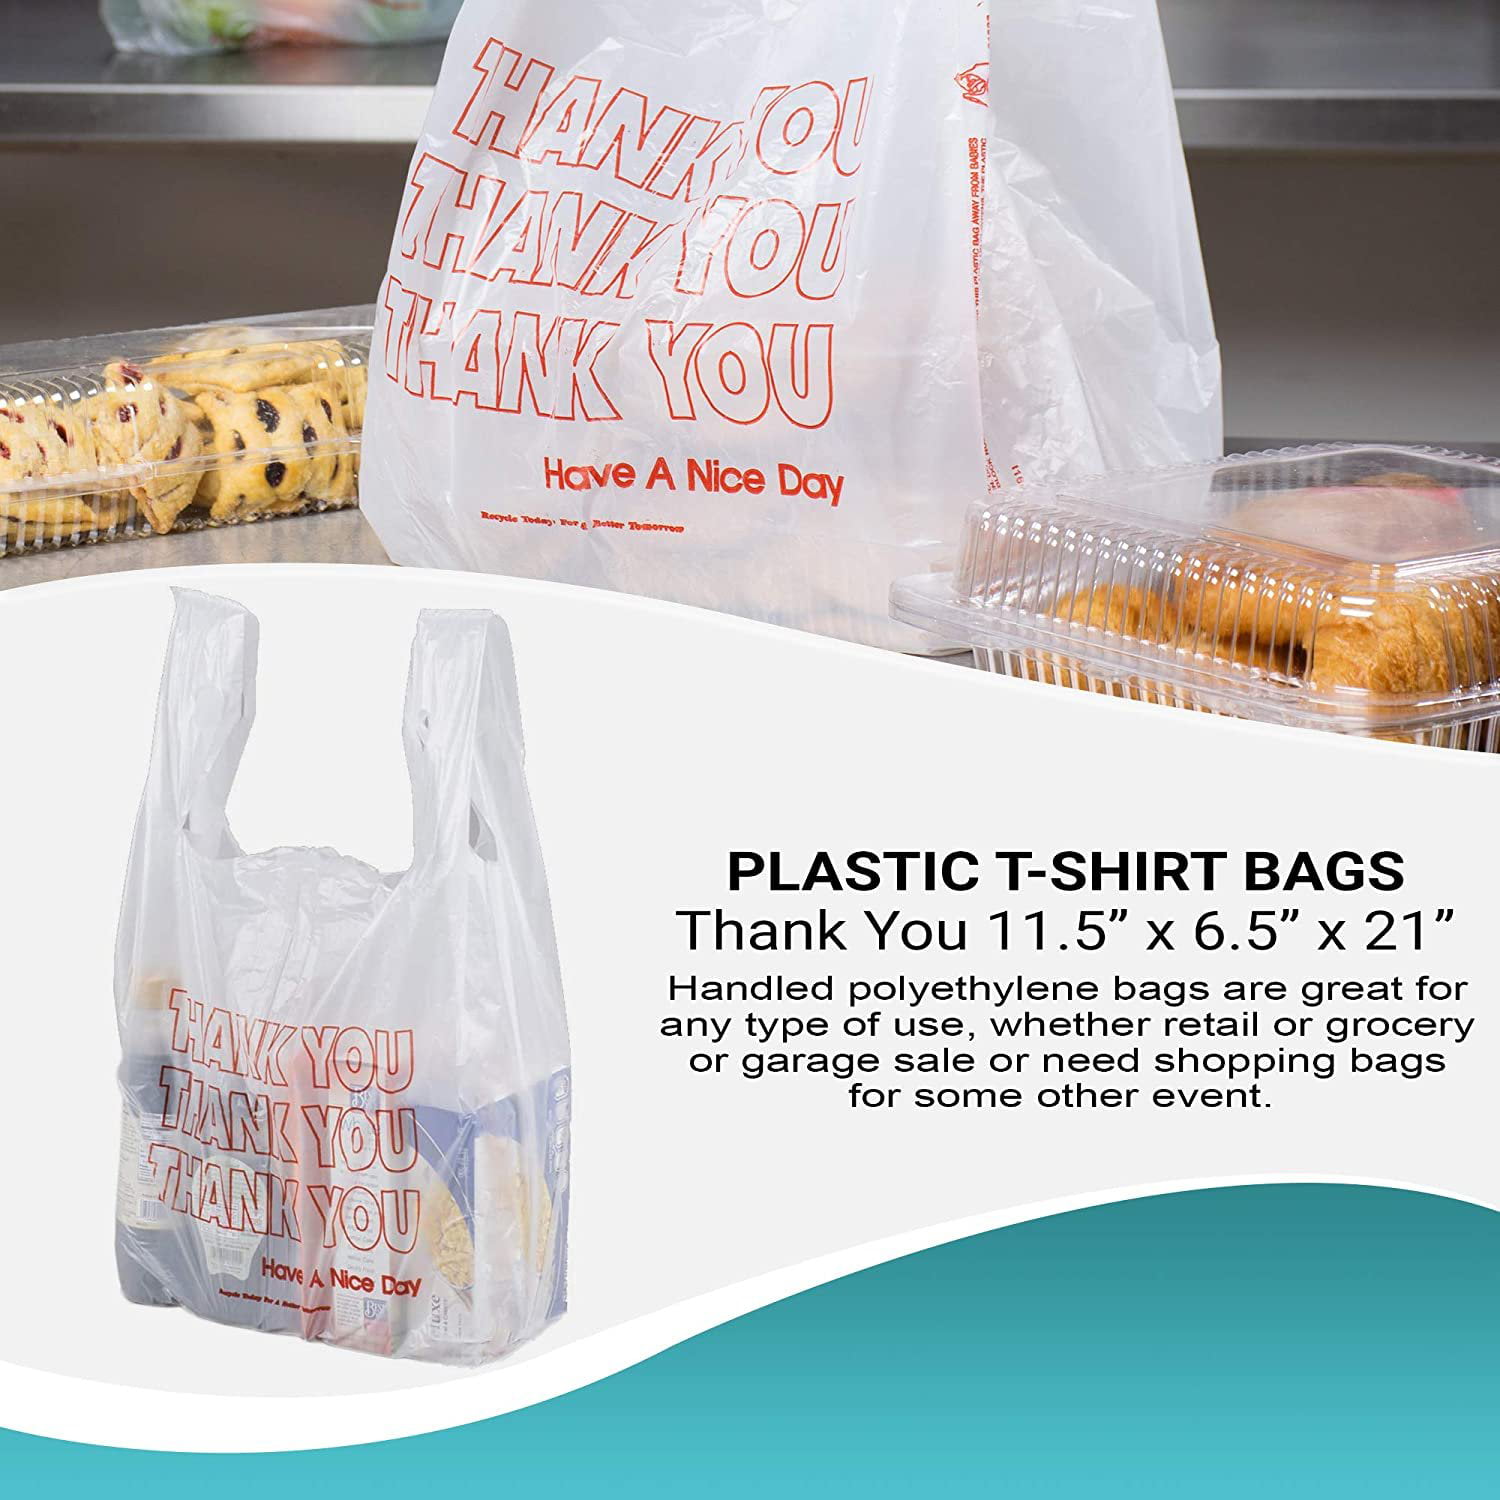 Plastic Bag-Black T-shirt Bags Heavy Duty Oversized Thank you Bag 13x10x23-21 microns 